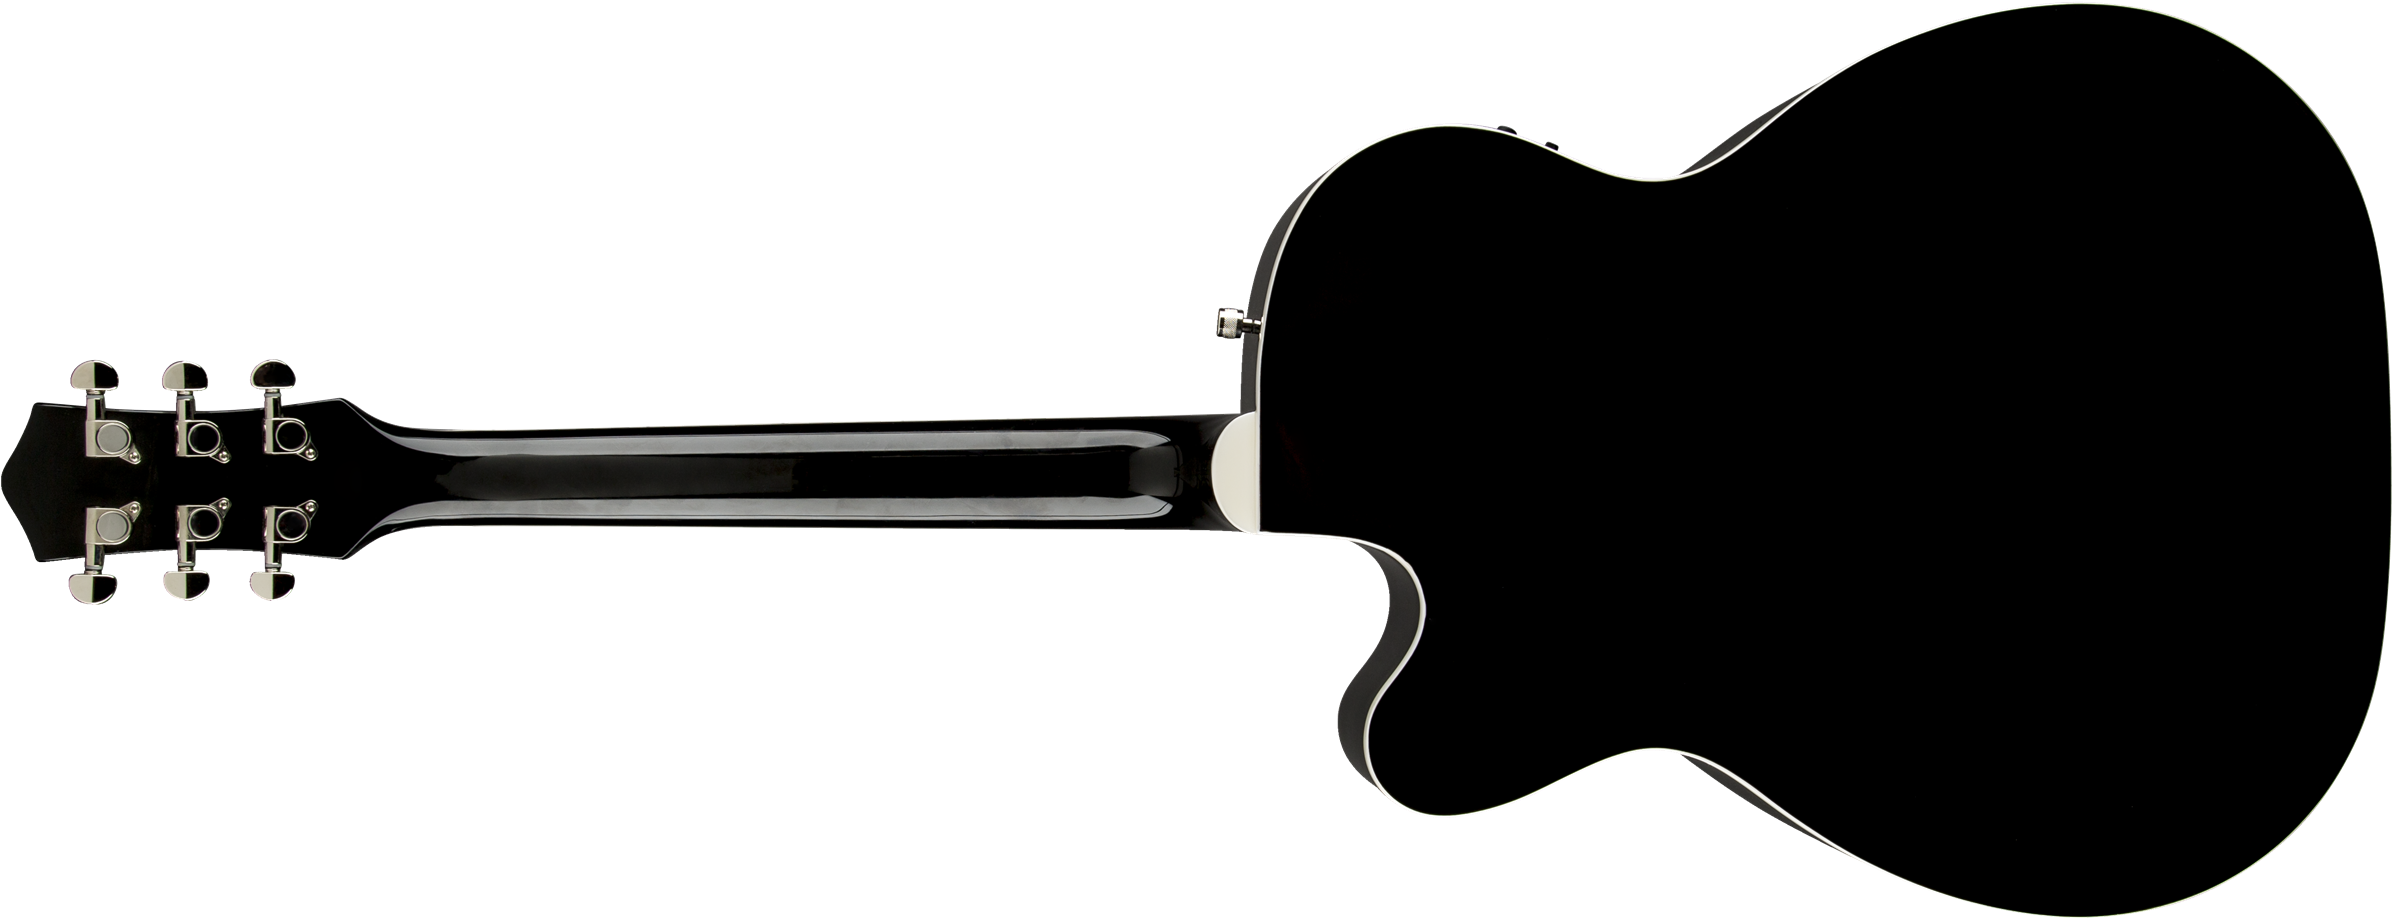 G5013ce Rancher™ Jr - Fender Cd 140sce Negra (2400x926), Png Download